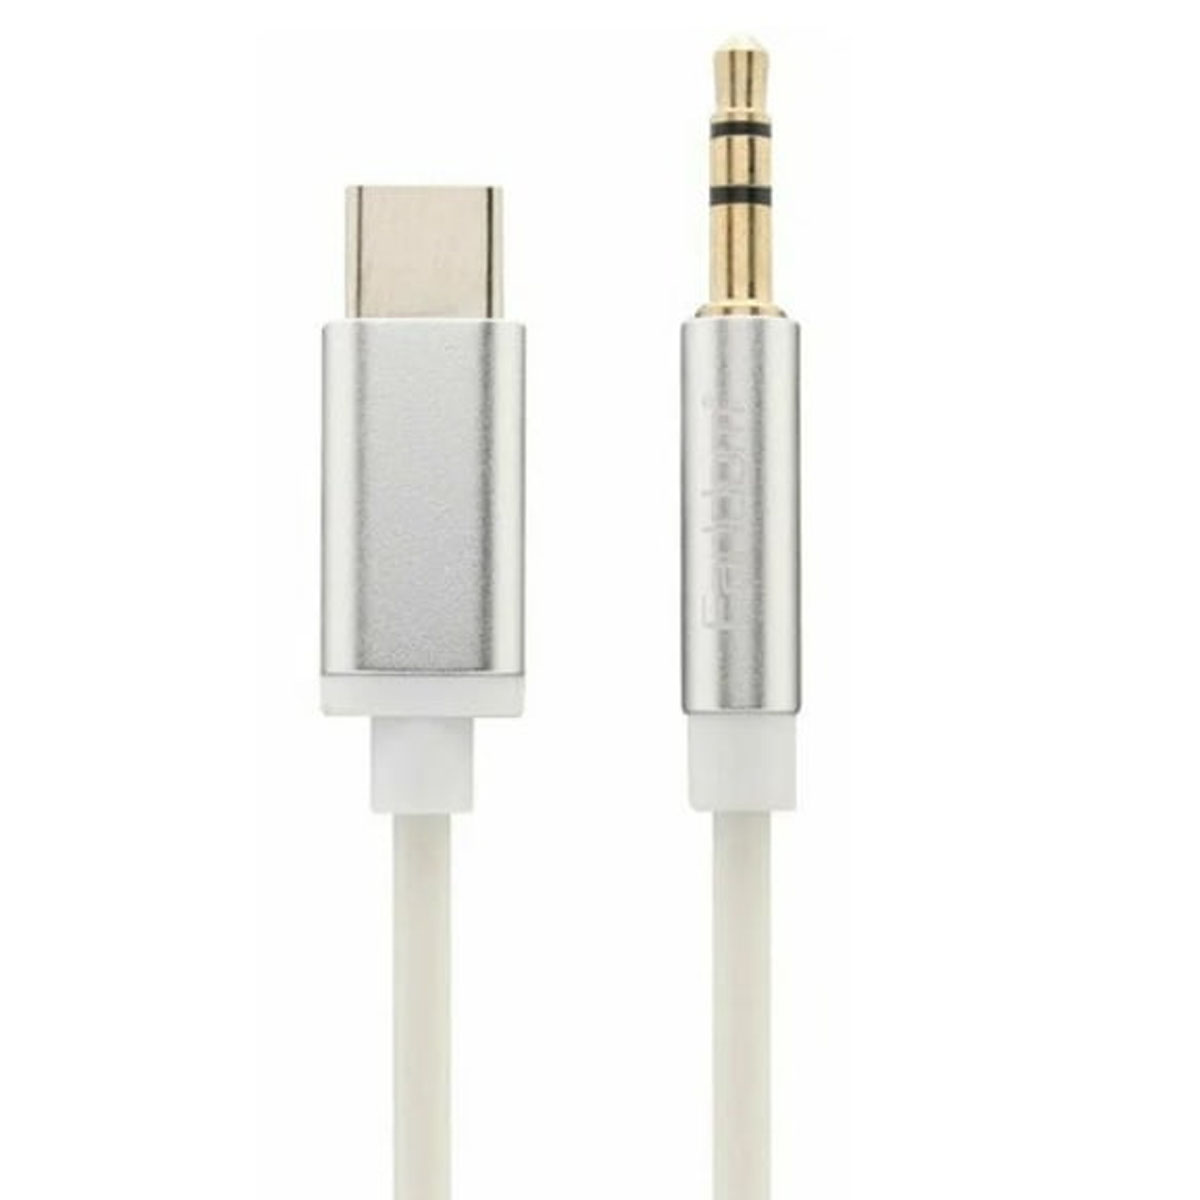 Аудио кабель, переходник EARLDOM AUX28, USB Type C на AUX Jack 3.5 mm, длина 1 метр, цвет бело серебритсый